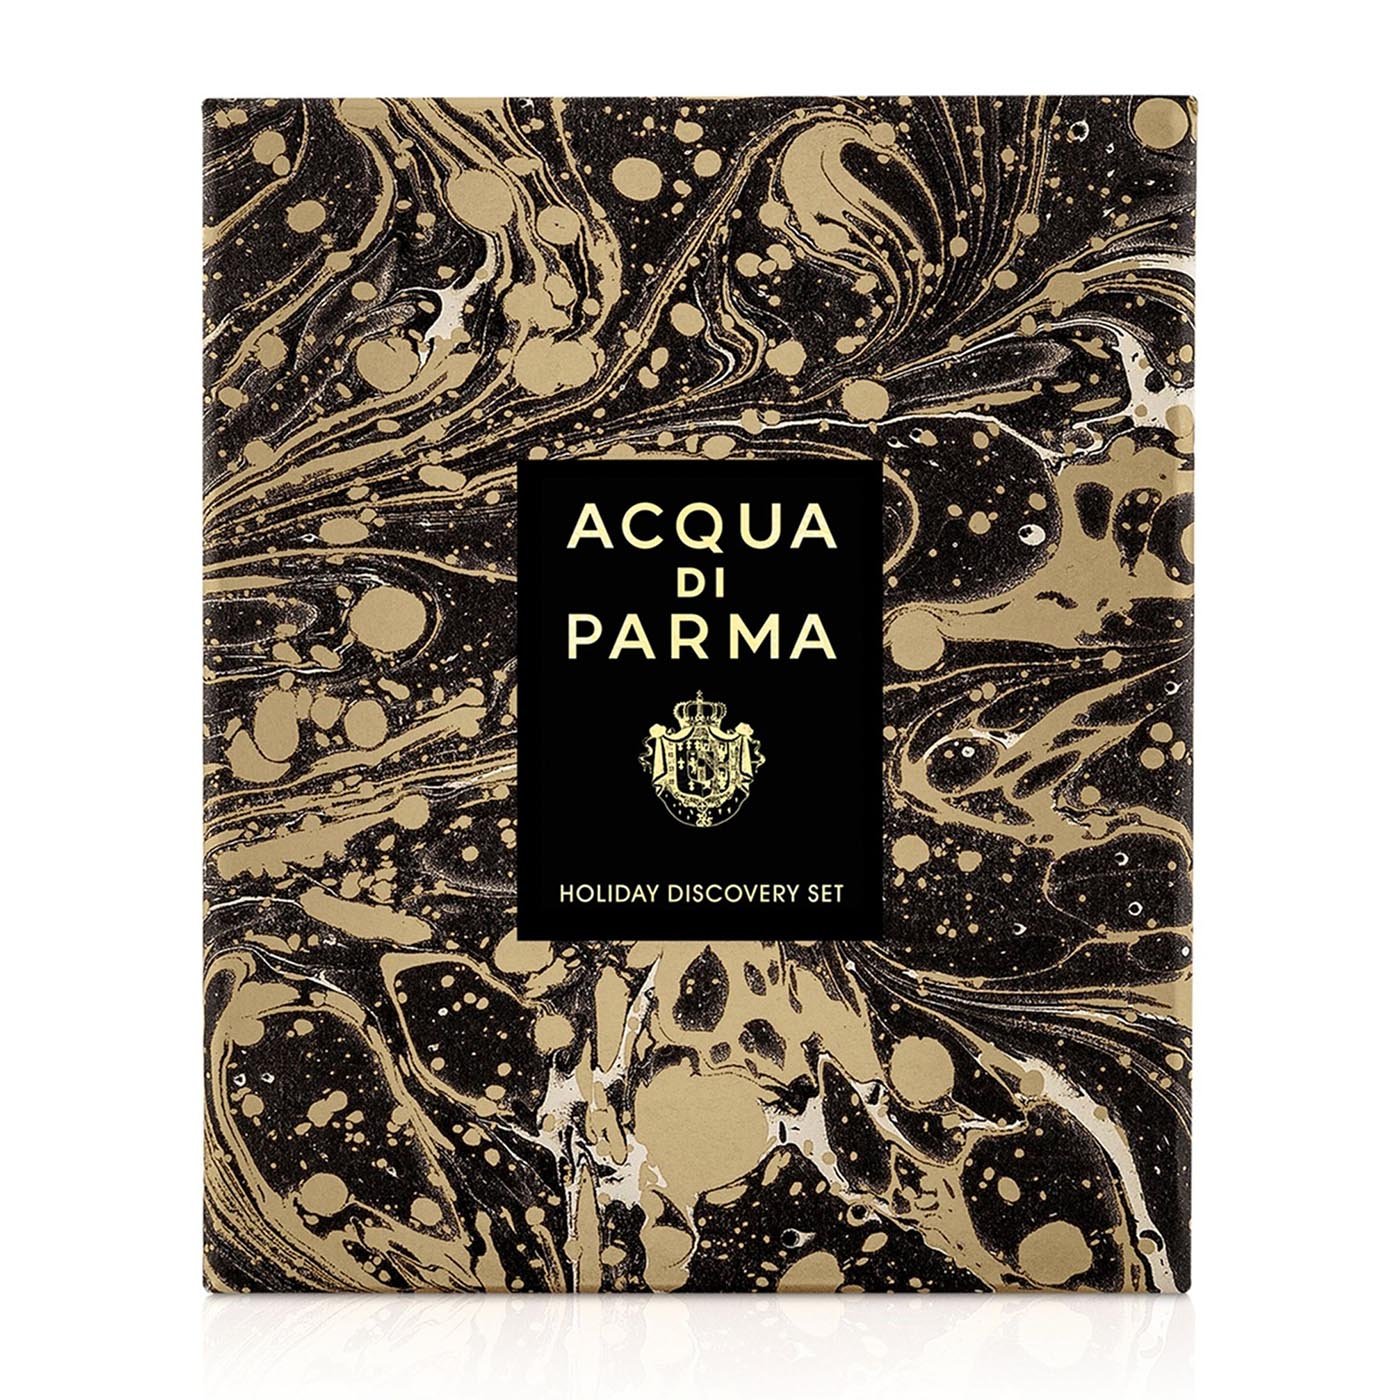 Acqua Di Parma Holiday Discovery Set | My Perfume Shop